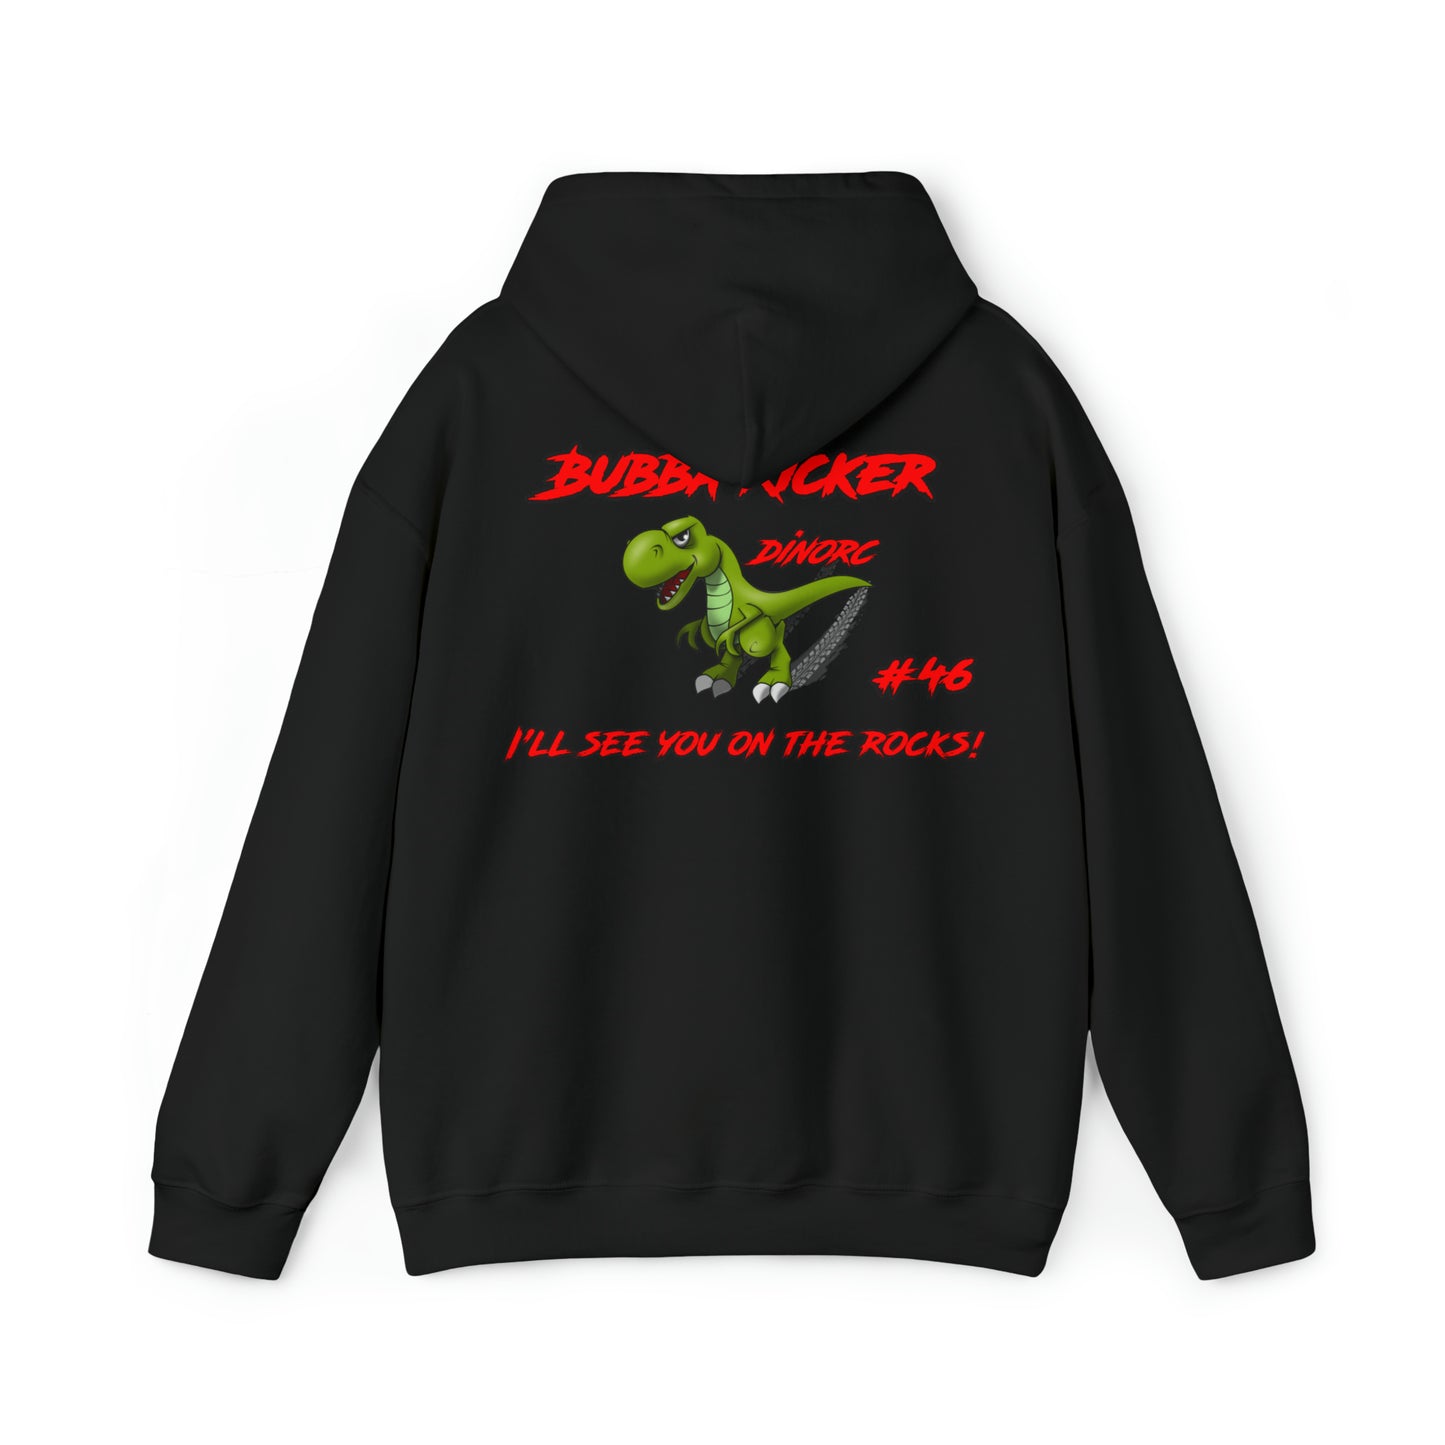 Bubba Ricker Team Driver Hooded Sweatshirt front back logo